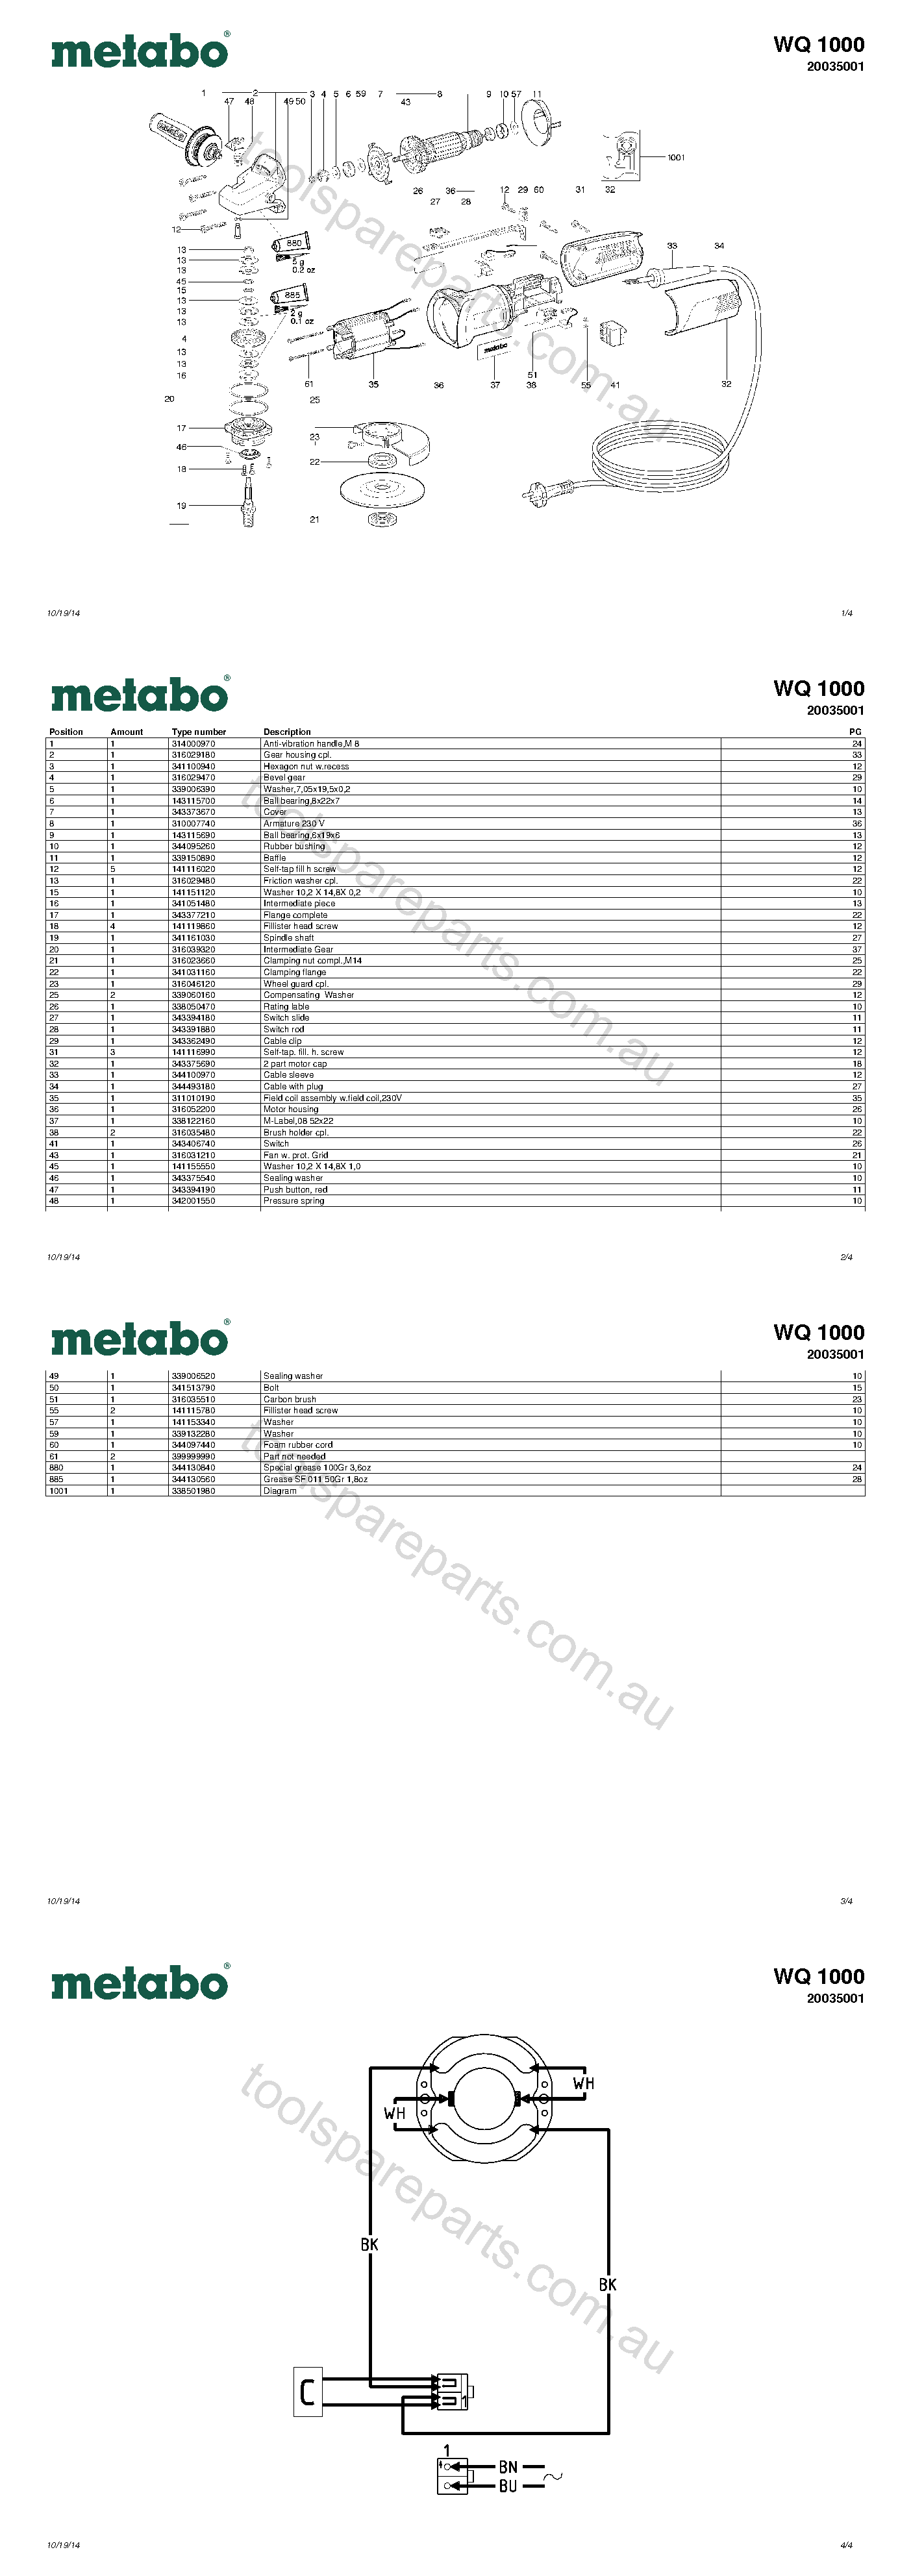 Metabo WQ 1000 20035001  Diagram 1